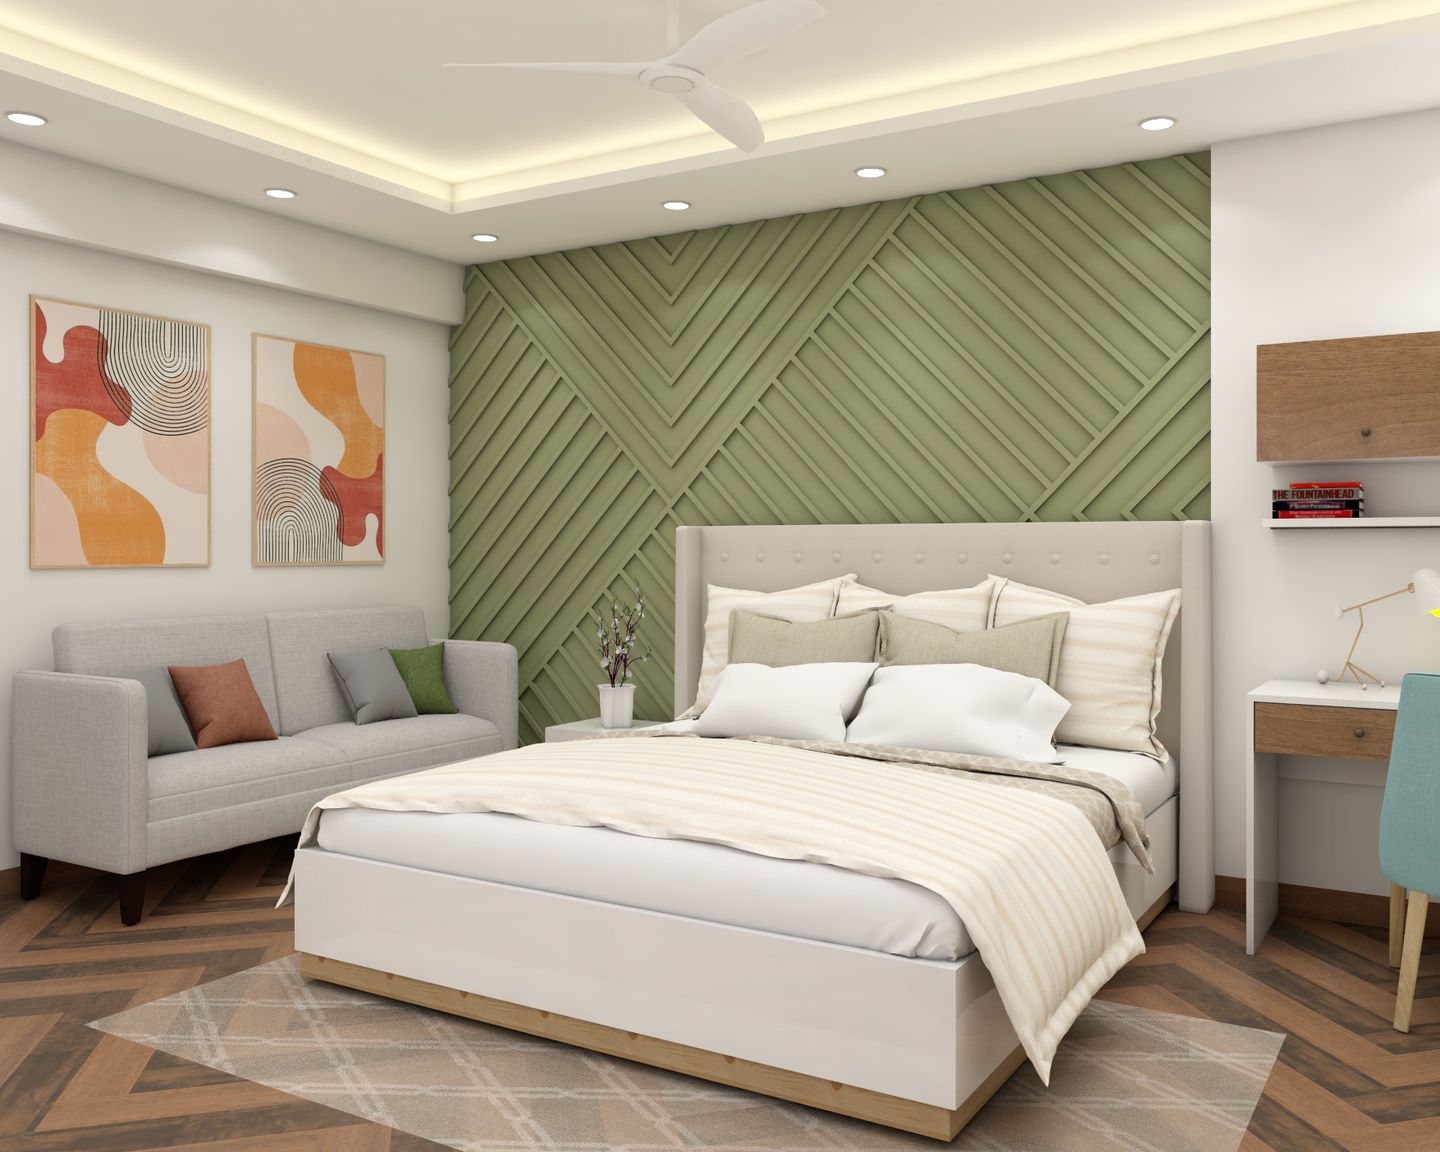 Multifunctional Master Bedroom Design - Livspace